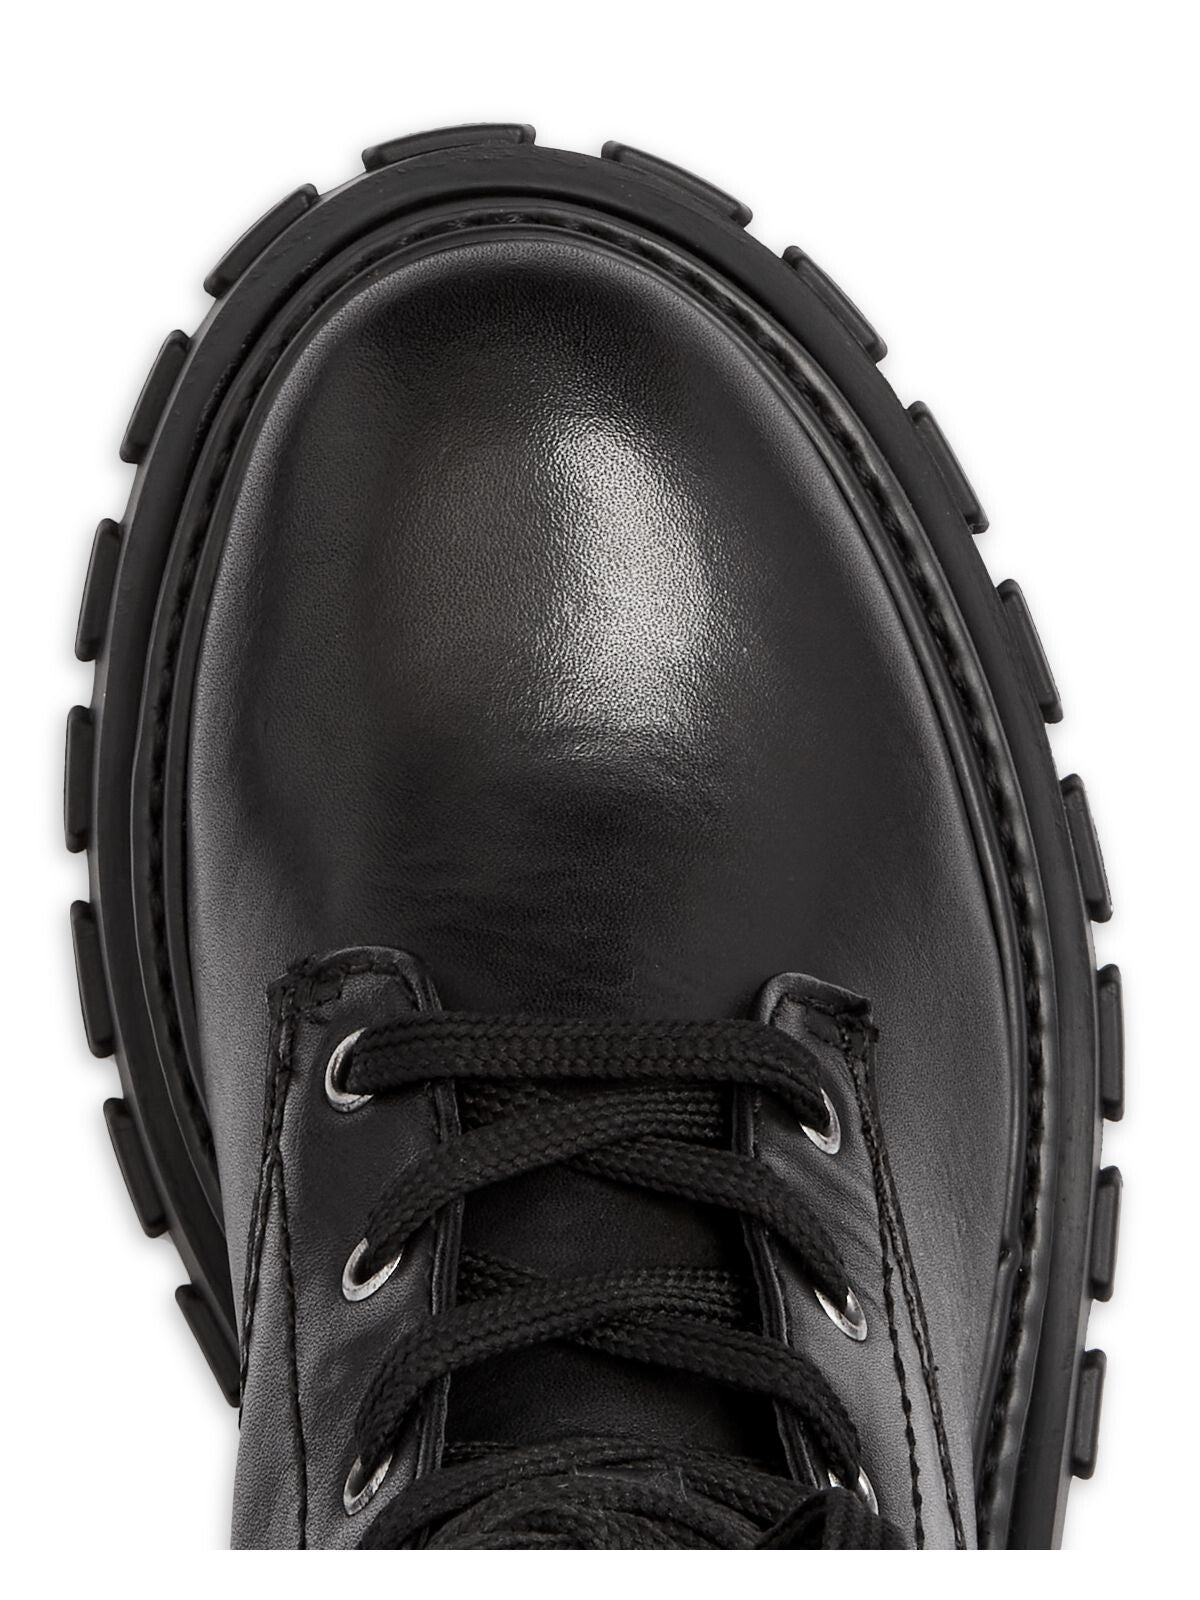 SCHUTZ Womens Black Logo Lug Sole Comfort Orly Round Toe Block Heel Lace-Up Leather Combat Boots 9.5 B